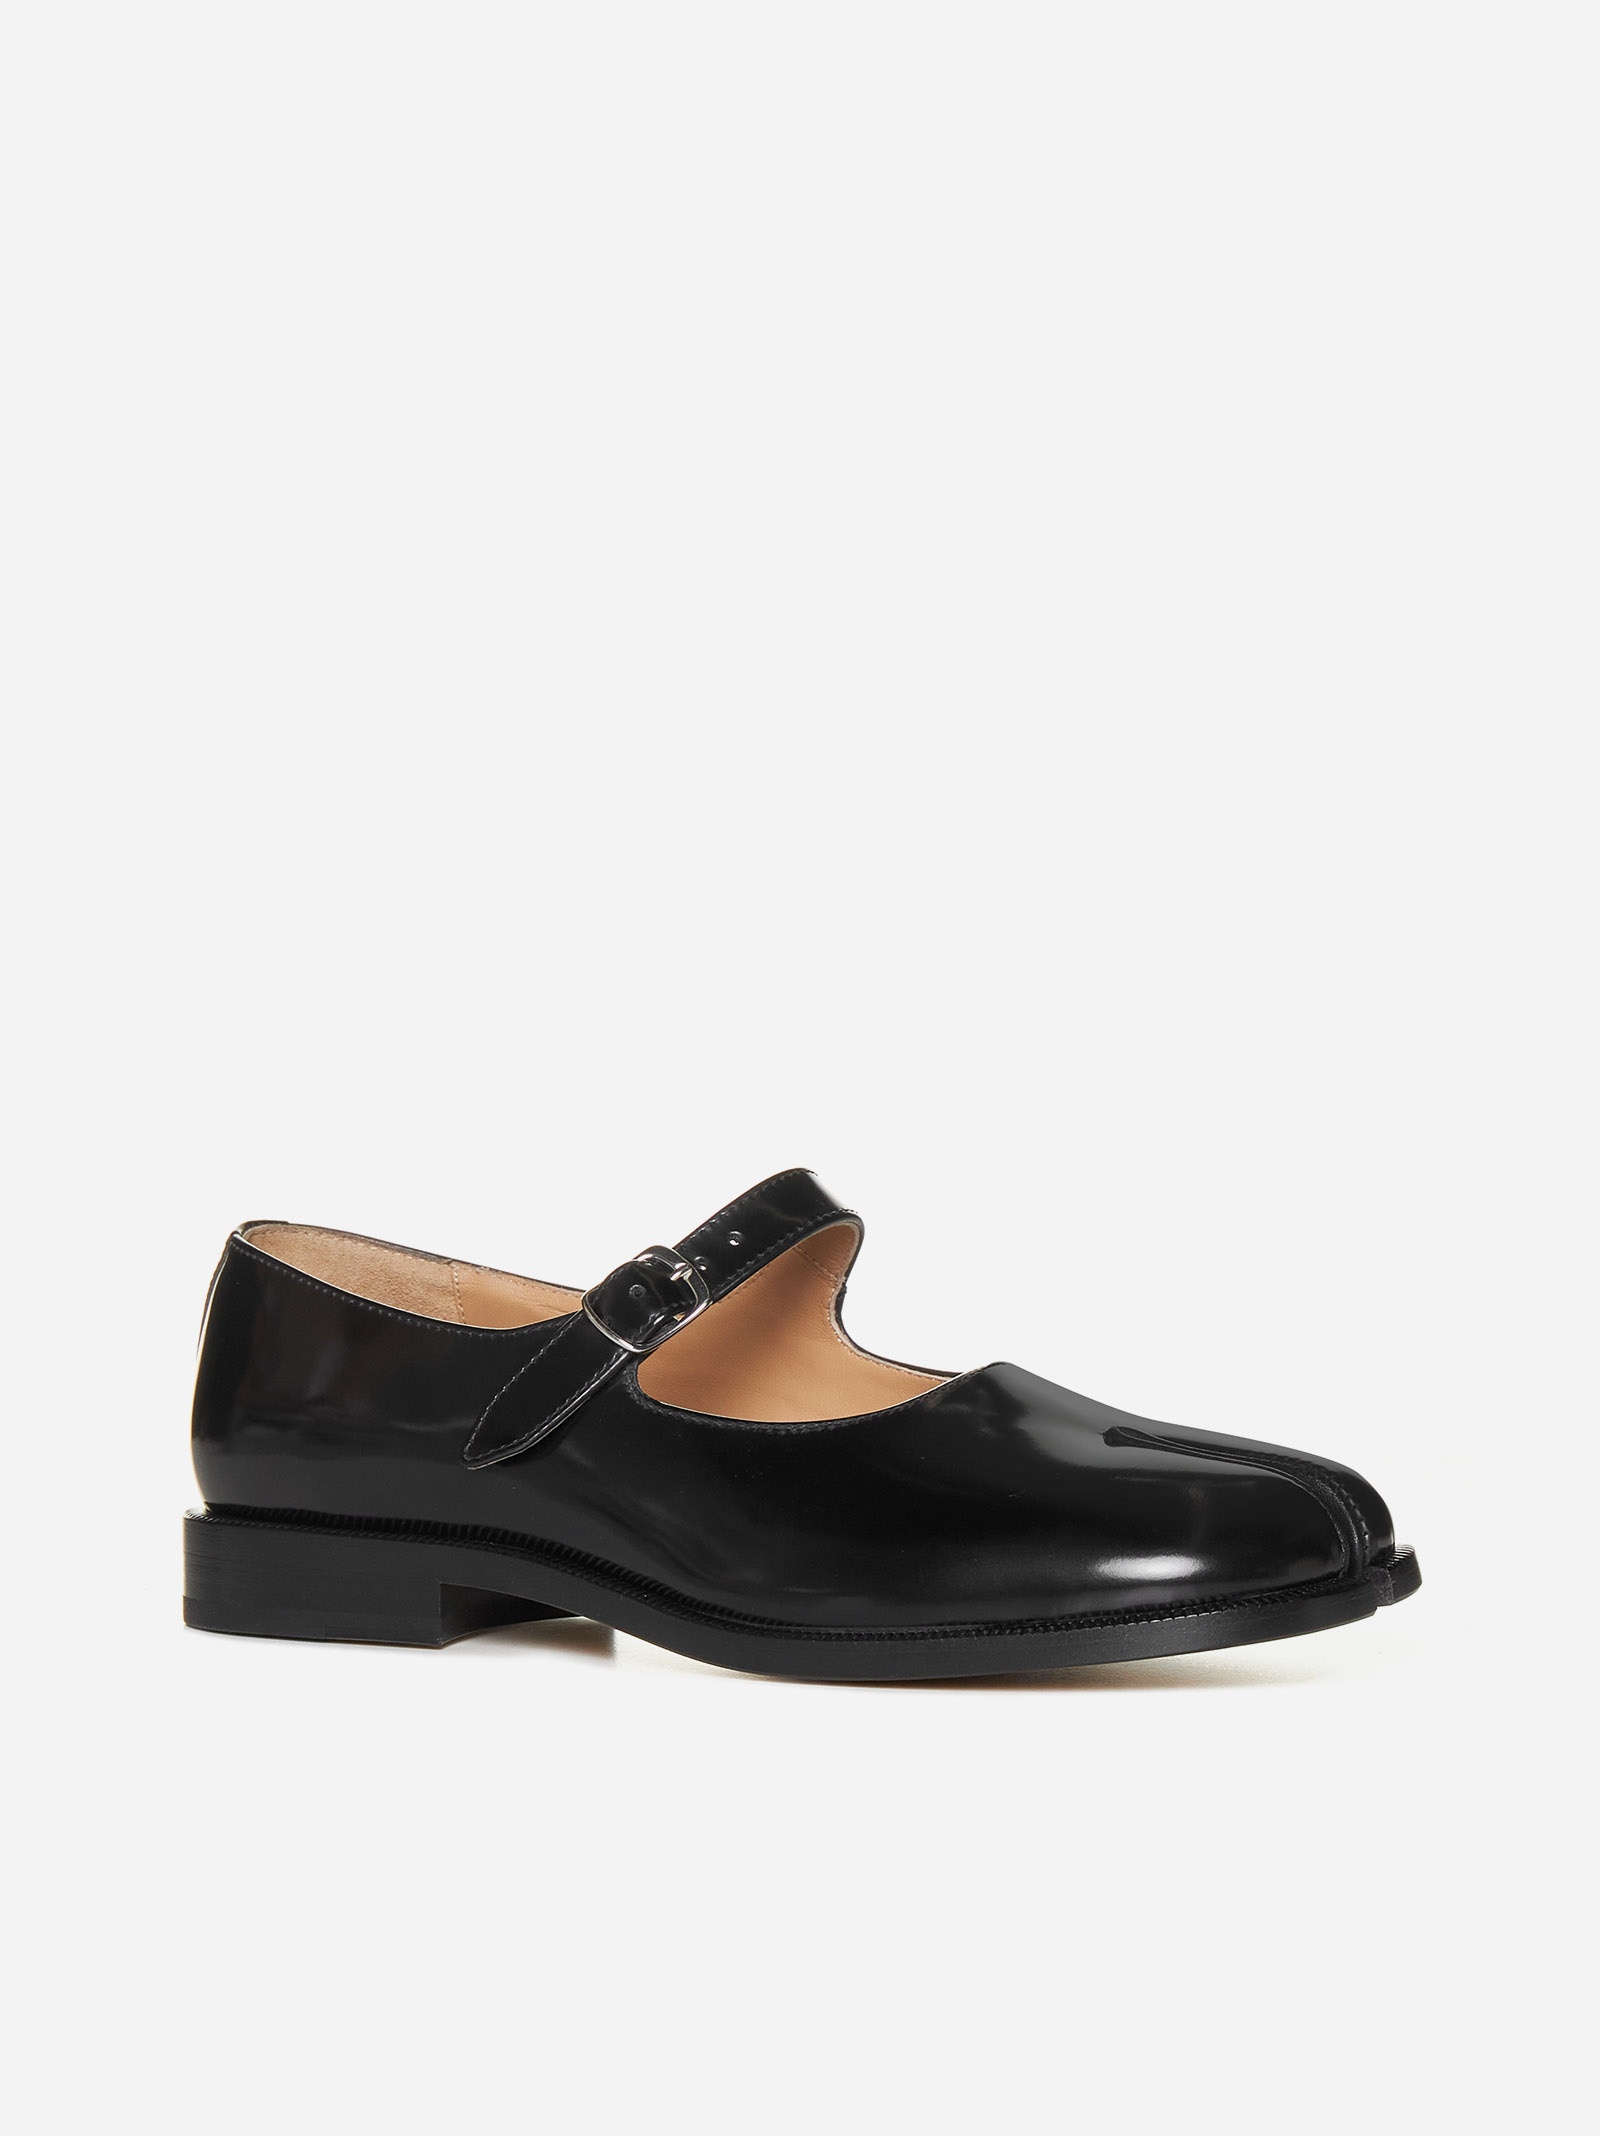 Tabi leather Mary Jane shoes - 2